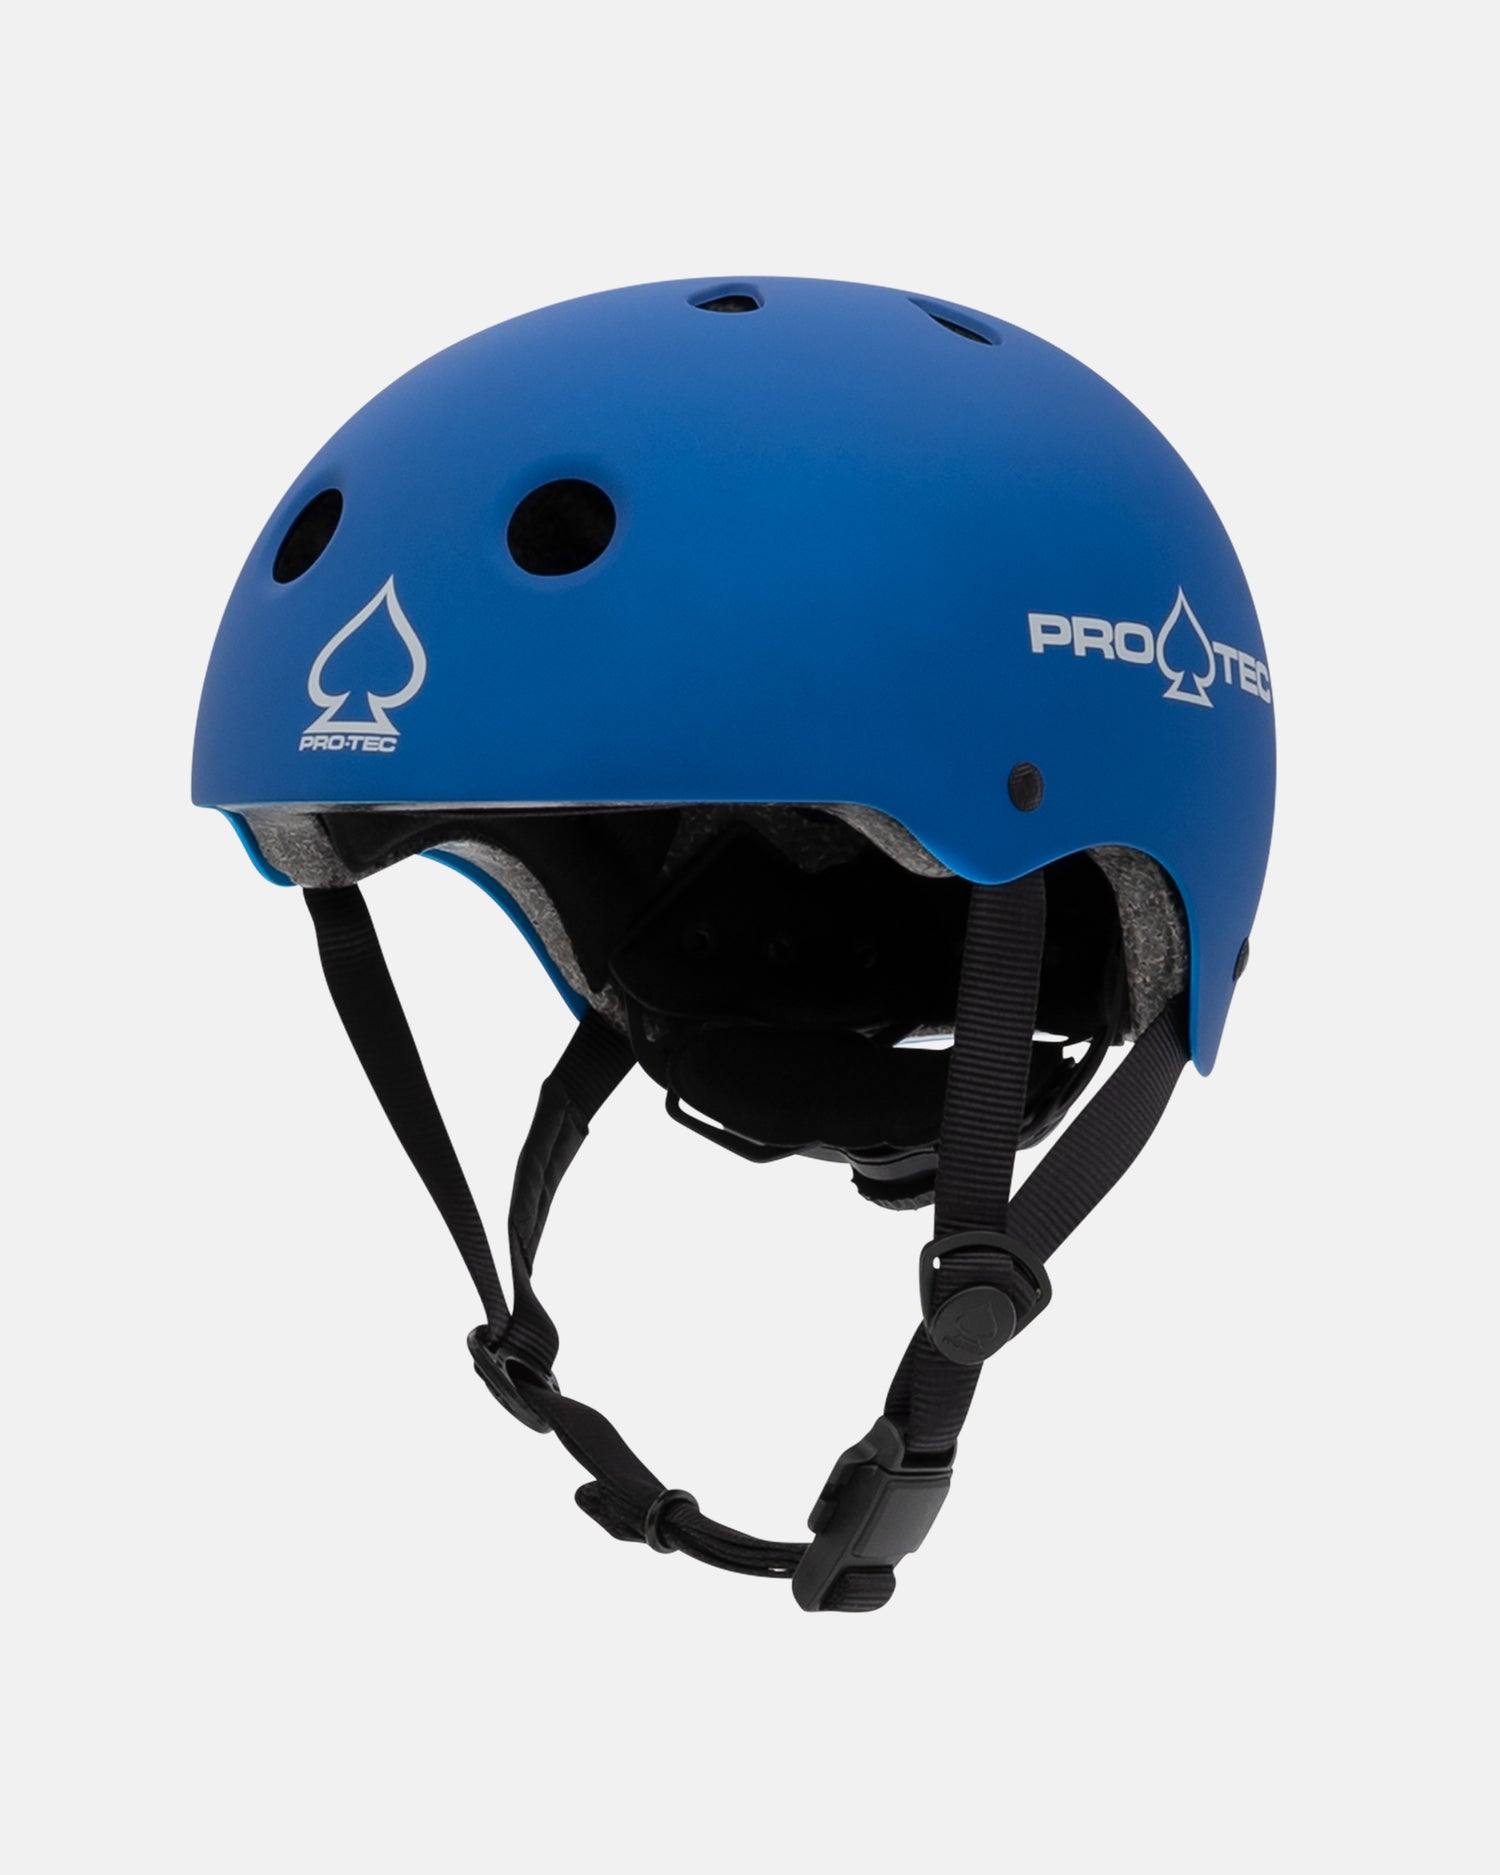 Protec Junior Classic Fit Helmet (Certified) - Metallic Blue - Impala Rollerskates